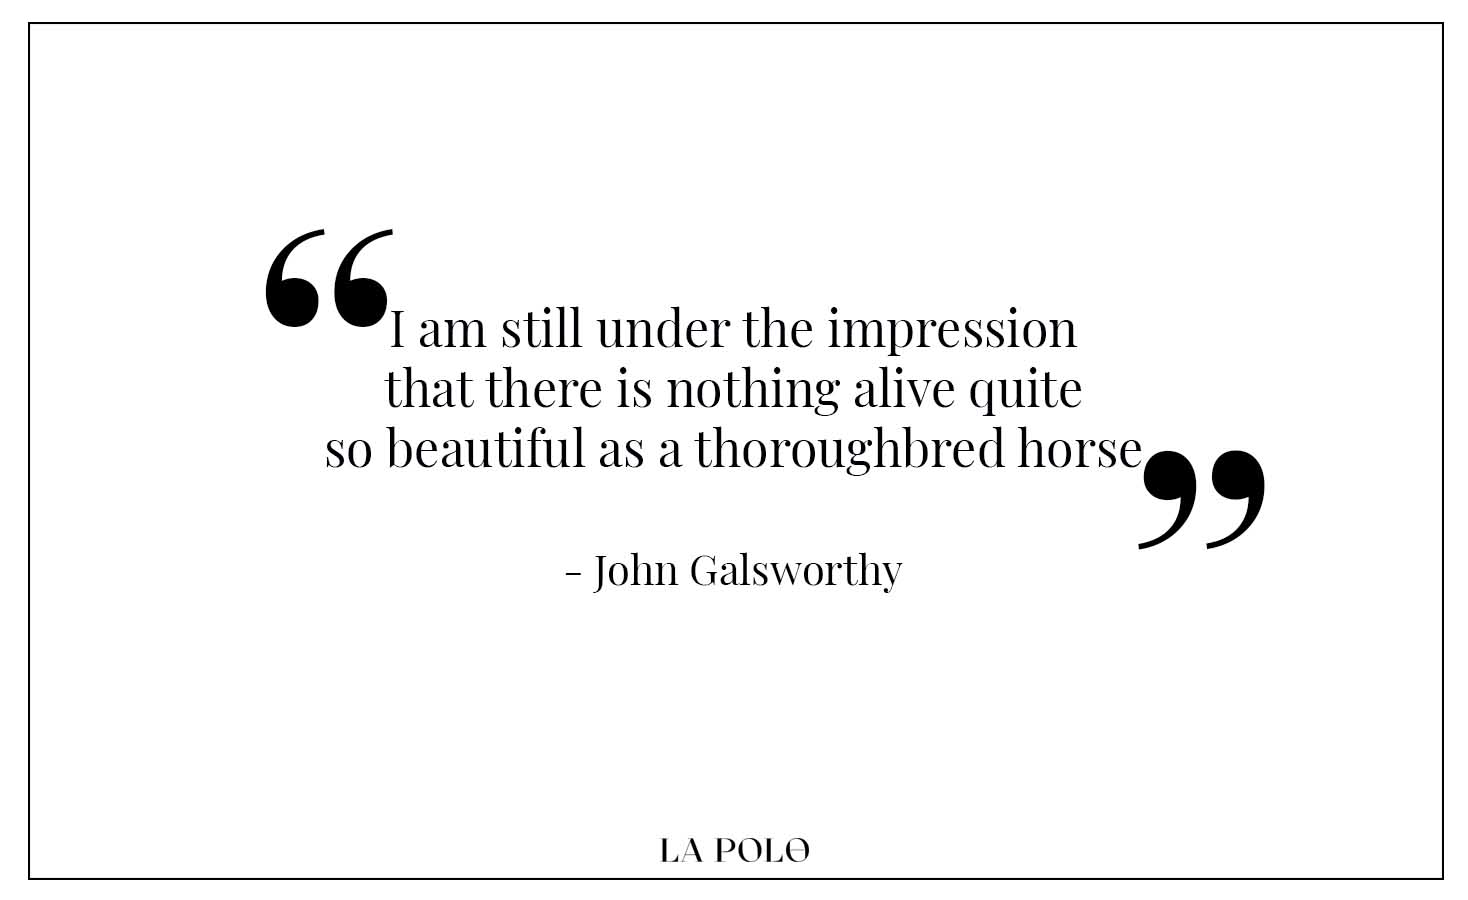 John Galsworthy quotes